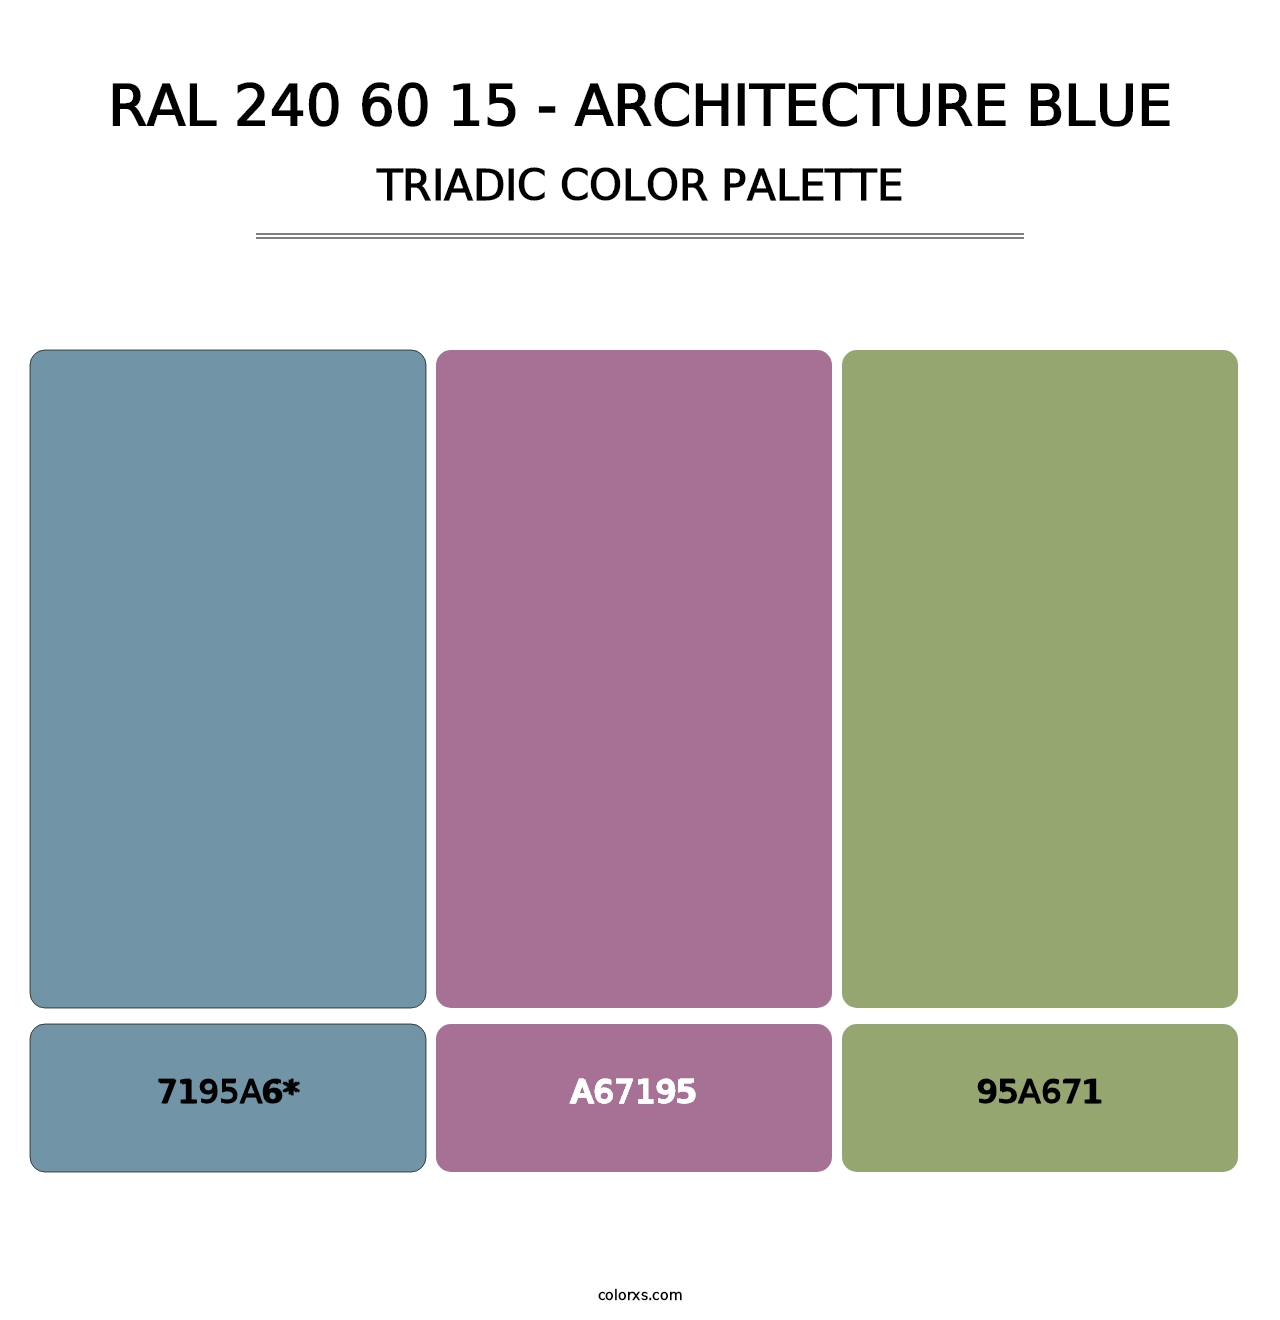 RAL 240 60 15 - Architecture Blue - Triadic Color Palette